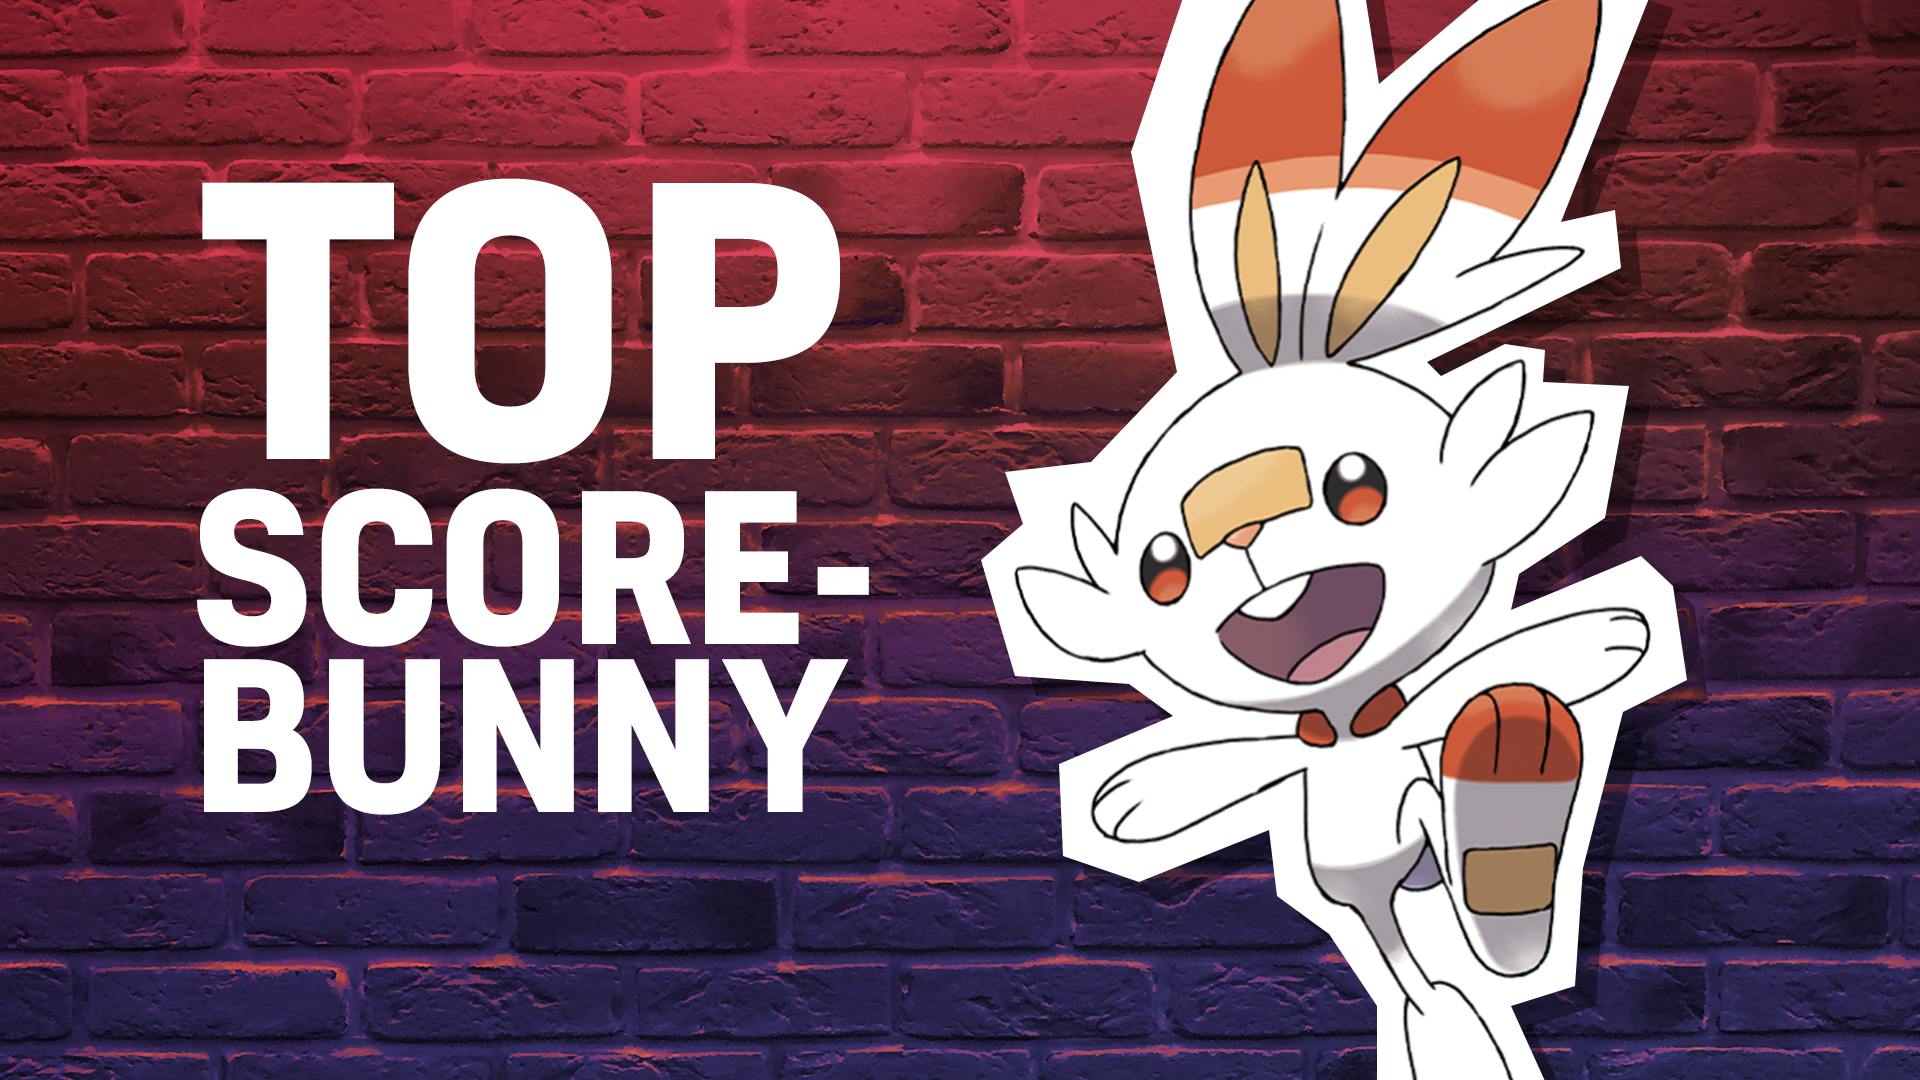 Top Score-bunny! Scorbunny jumps for joy